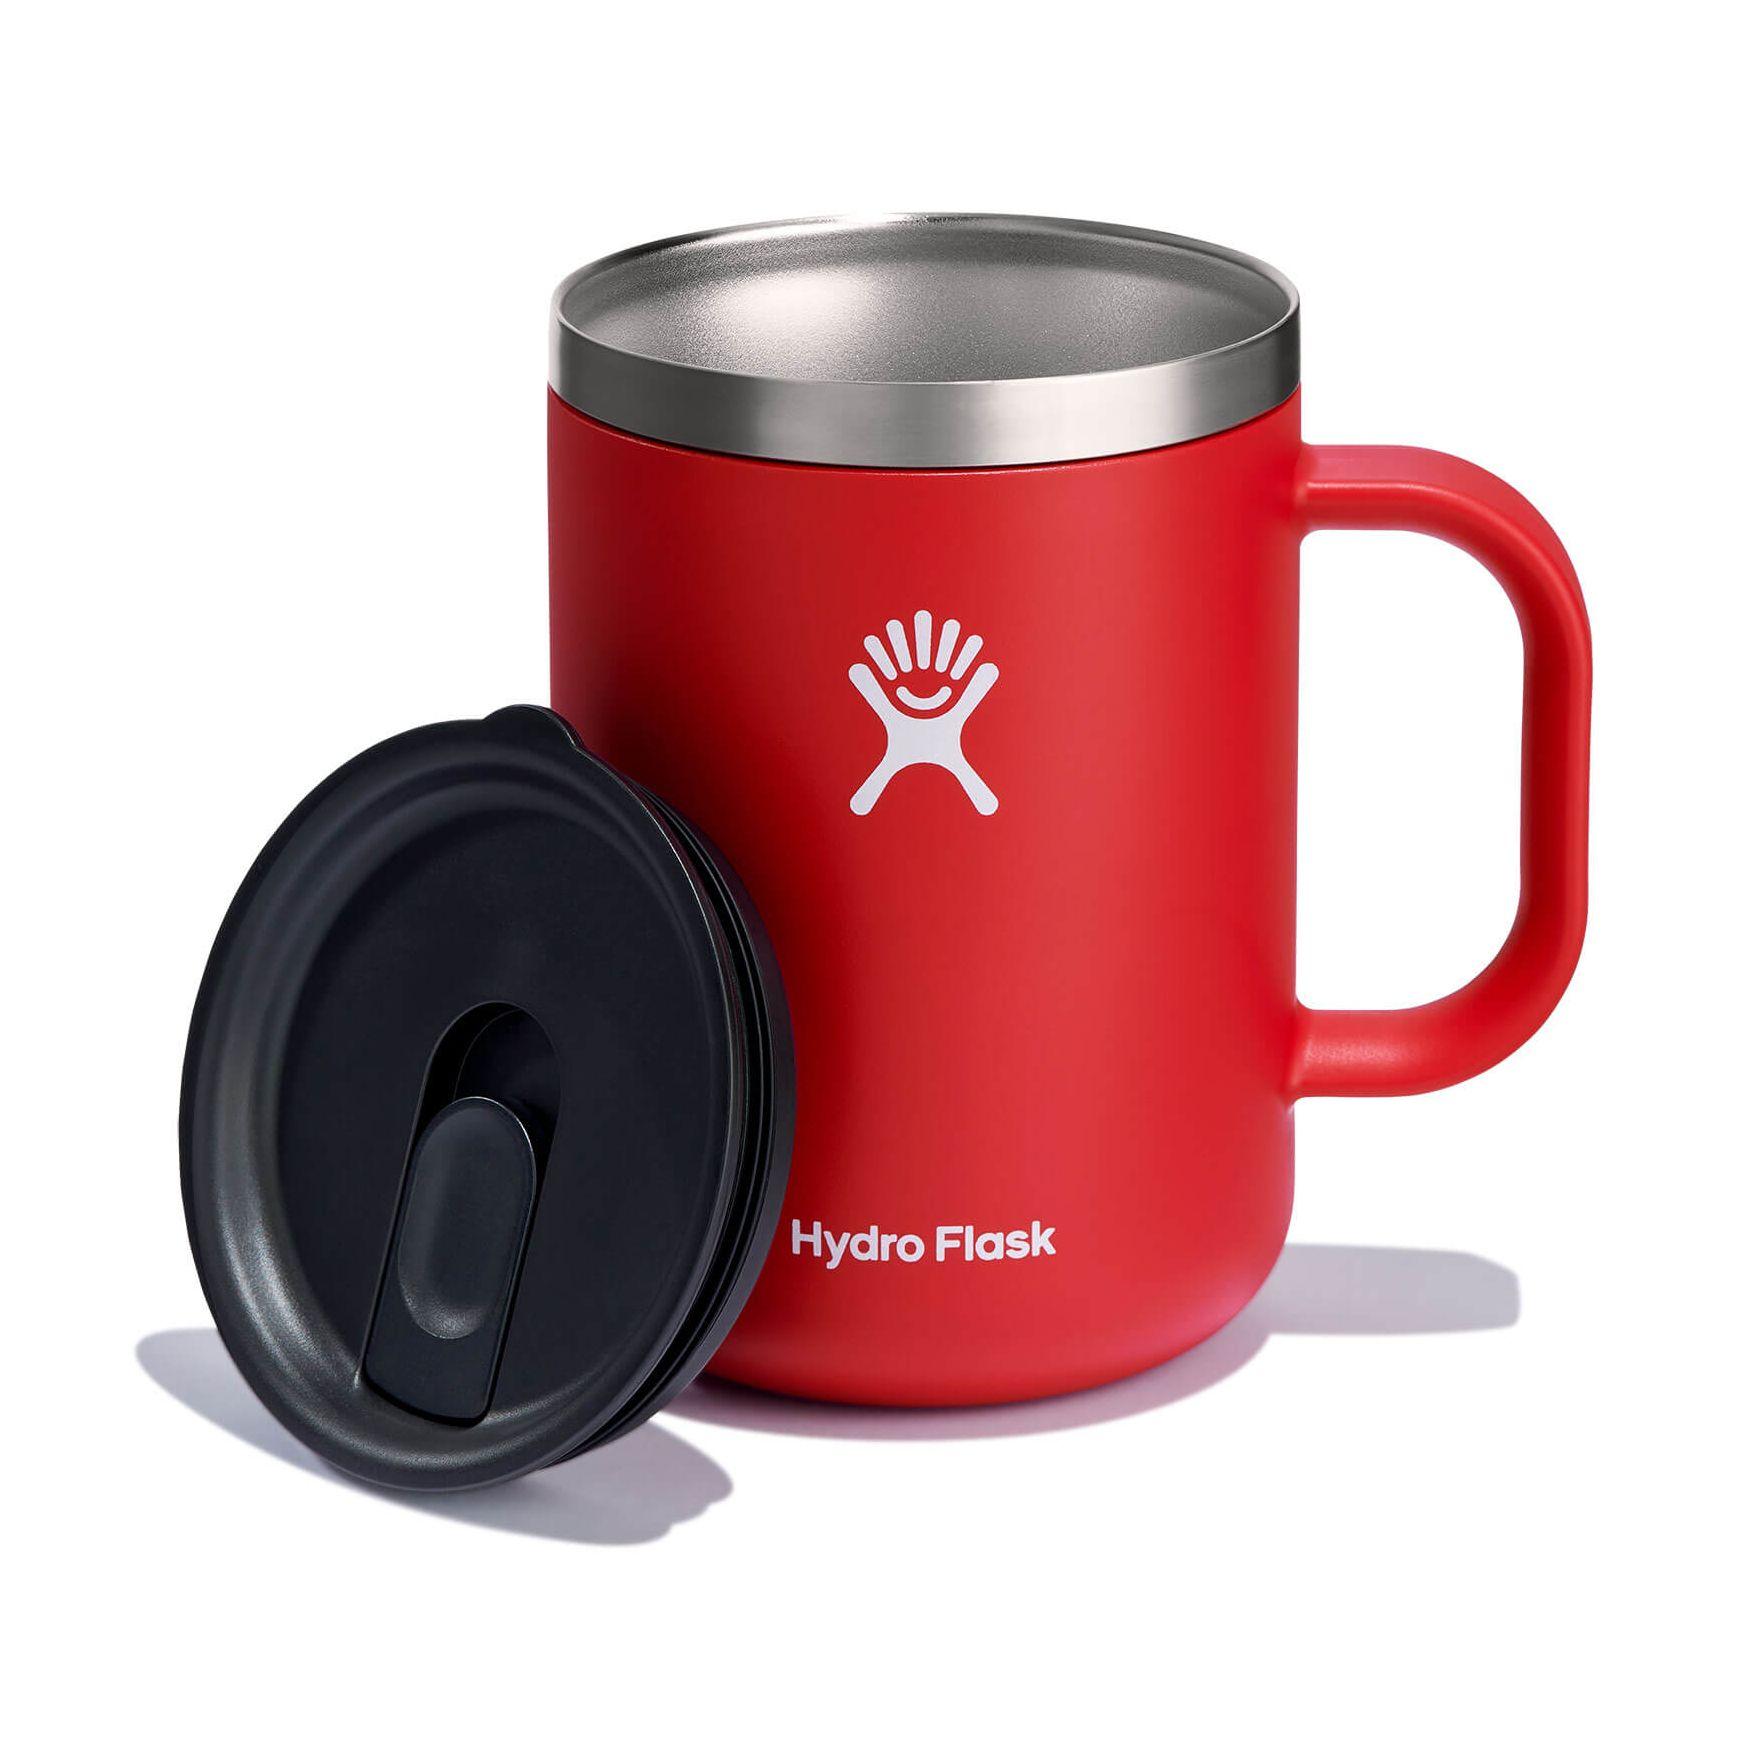 https://www.go2marine.com/item-images/563701-hydro-flask-24-oz-coffee-mug_Red-0.jpg